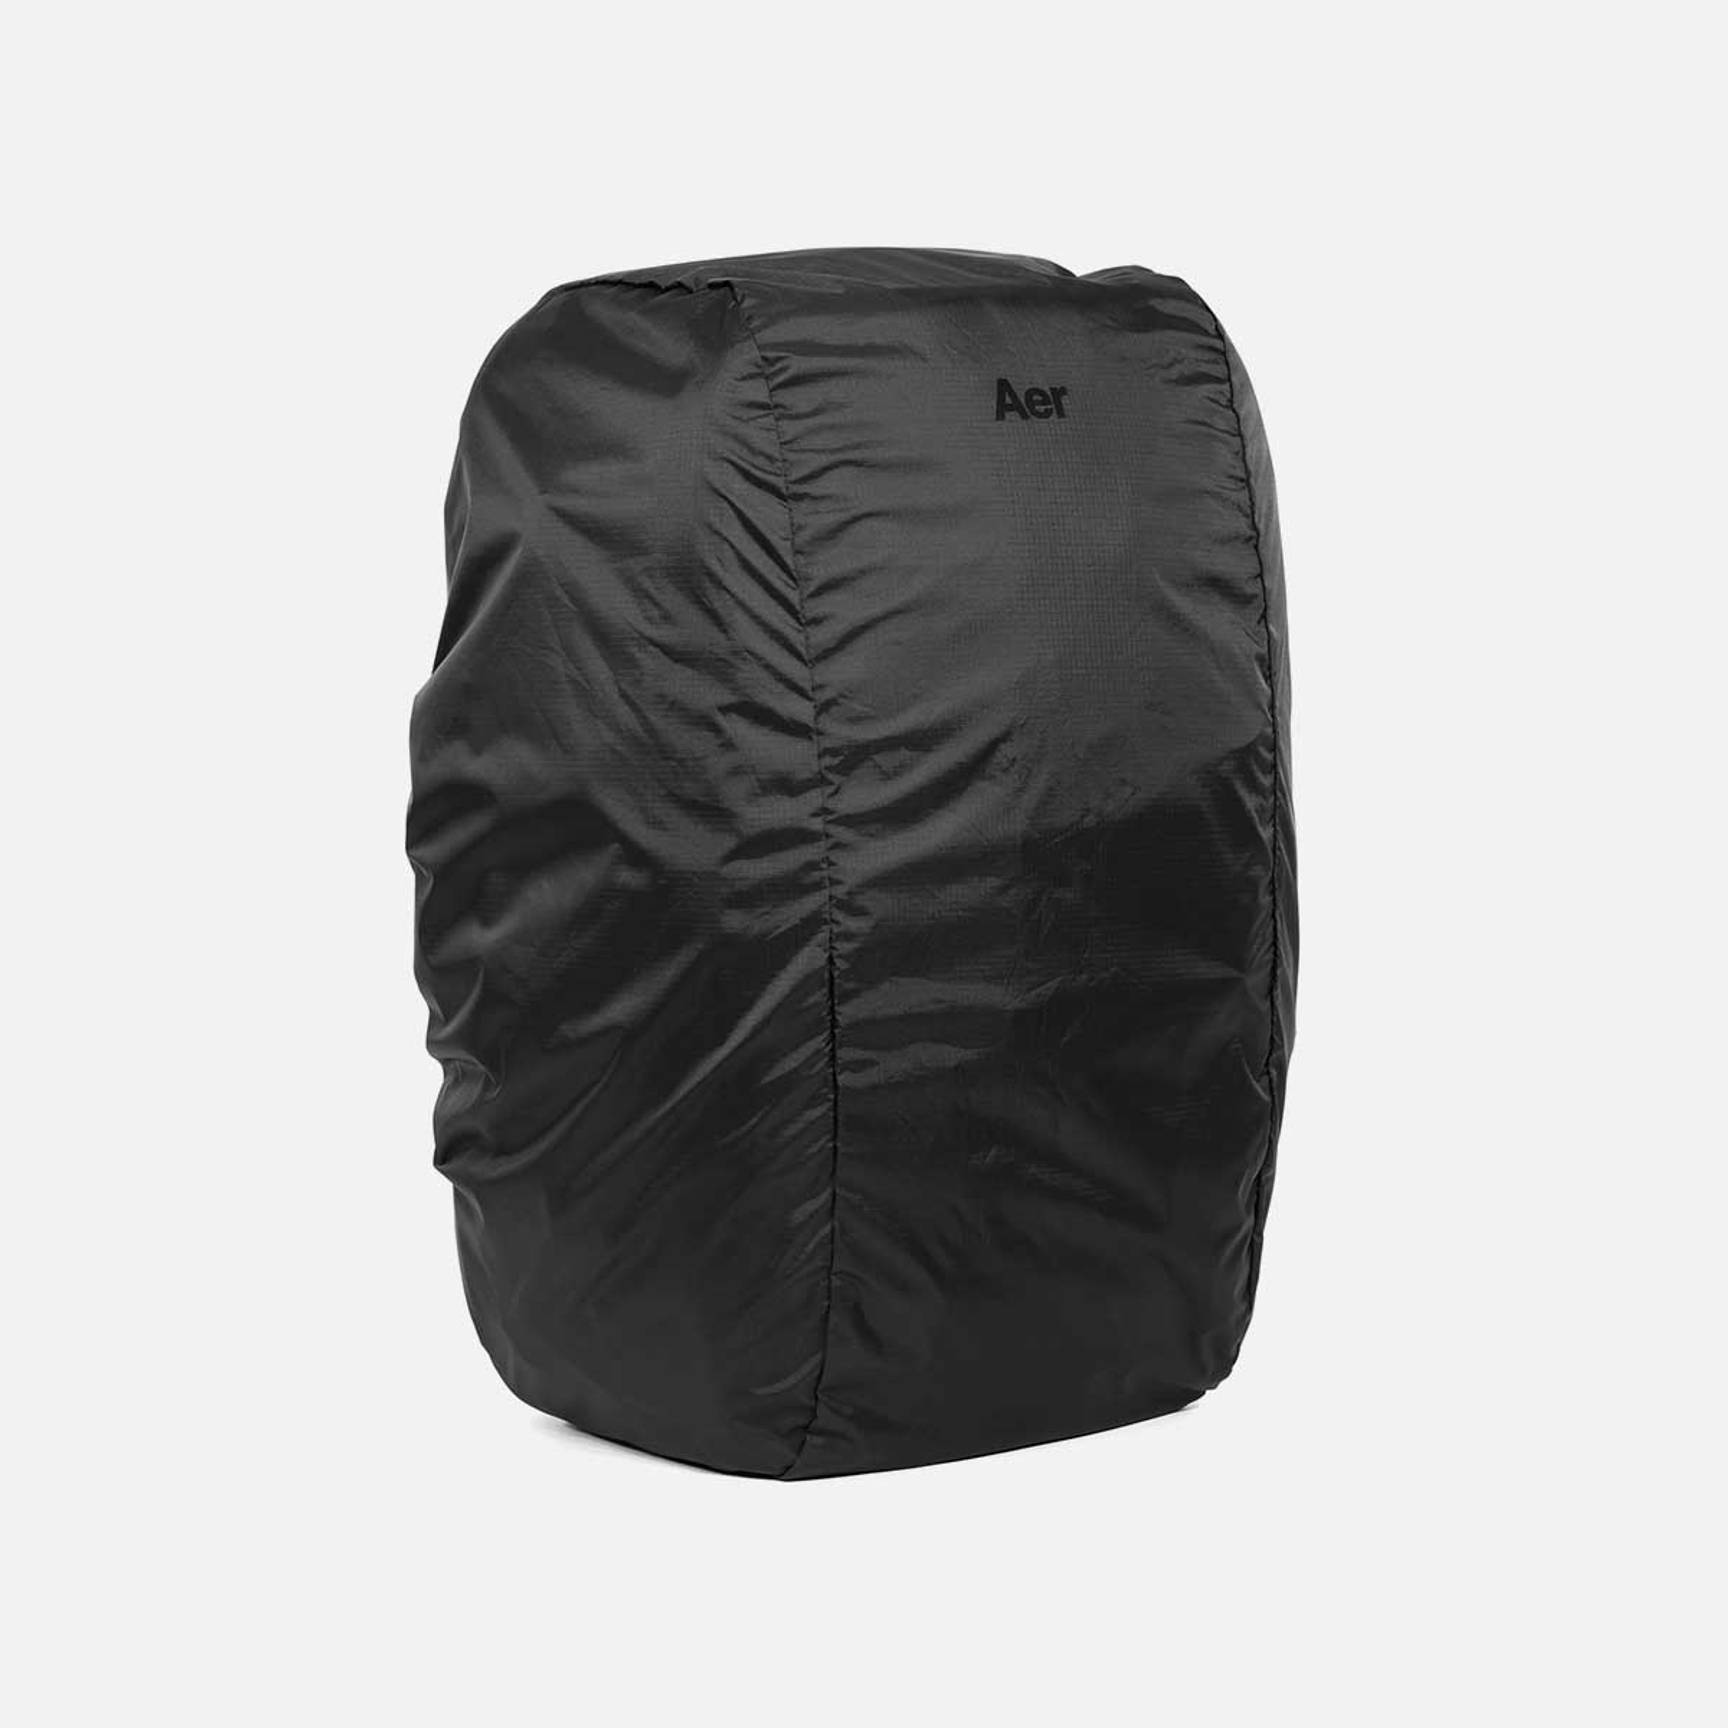 Handbag Poncho/handbag Raincoat/ Handbag Rain Cover/purse Rain 